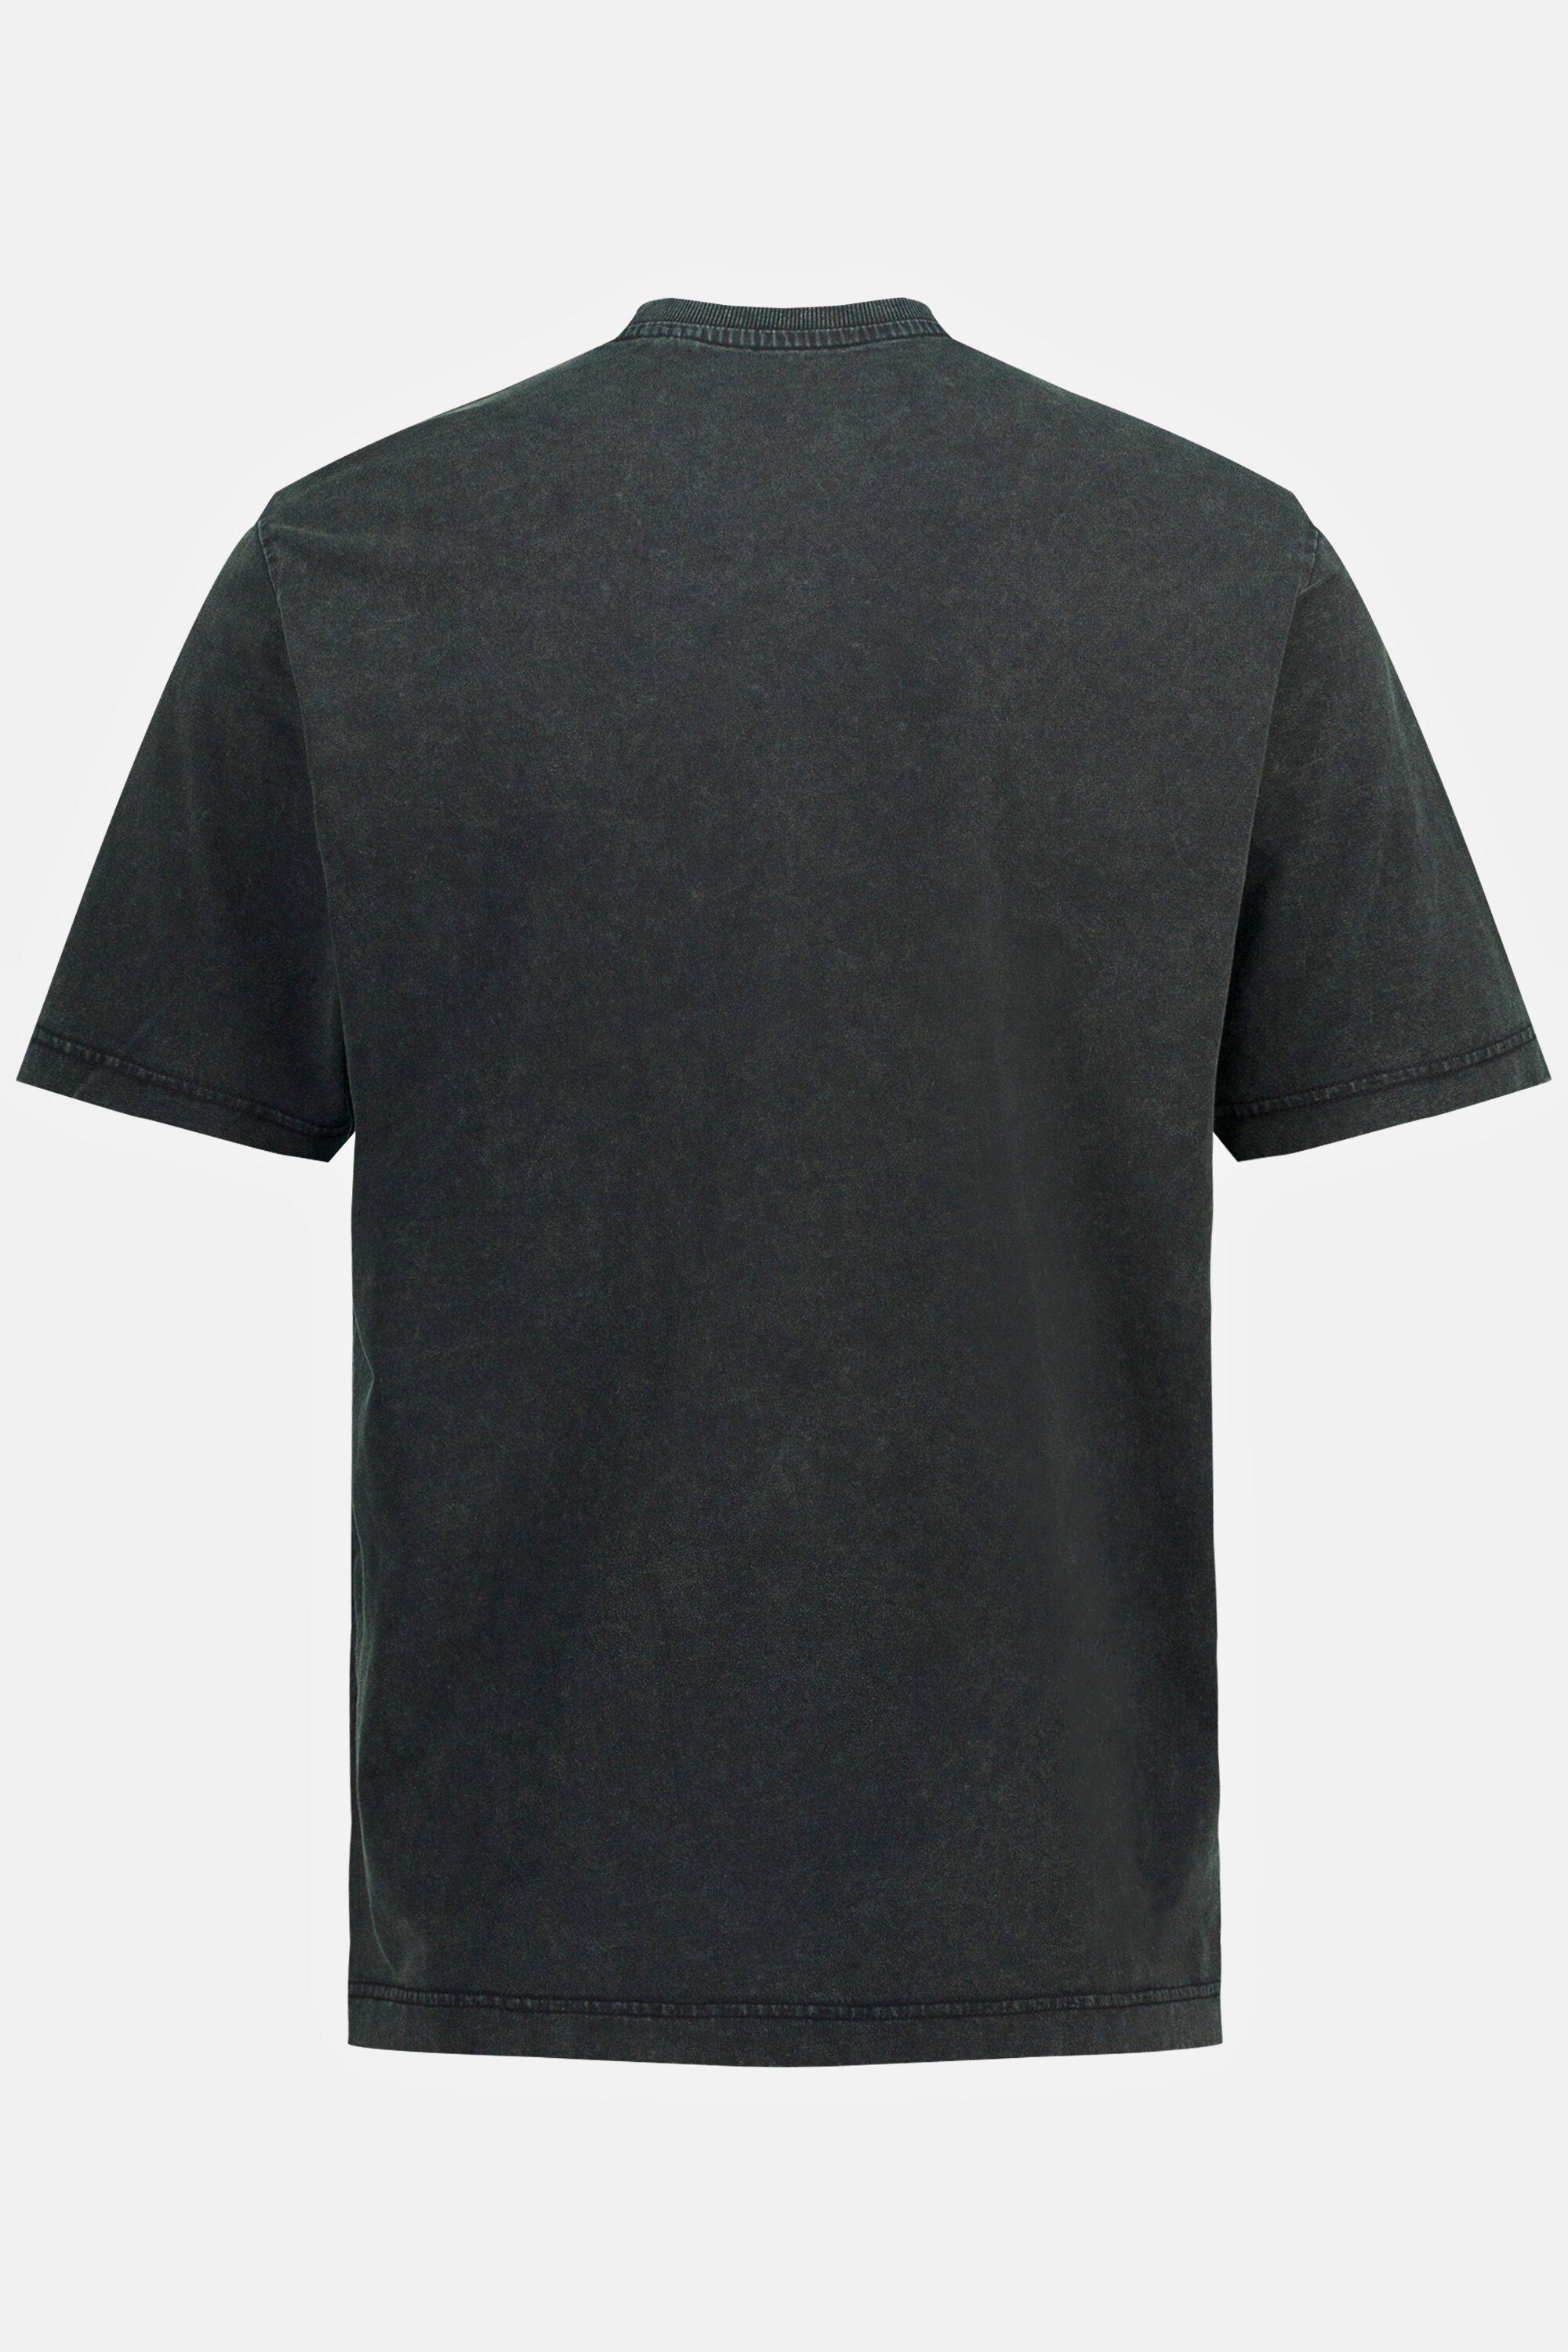 JP1880 T-Shirt T-Shirt Print Workwear Halbarm Rundhals